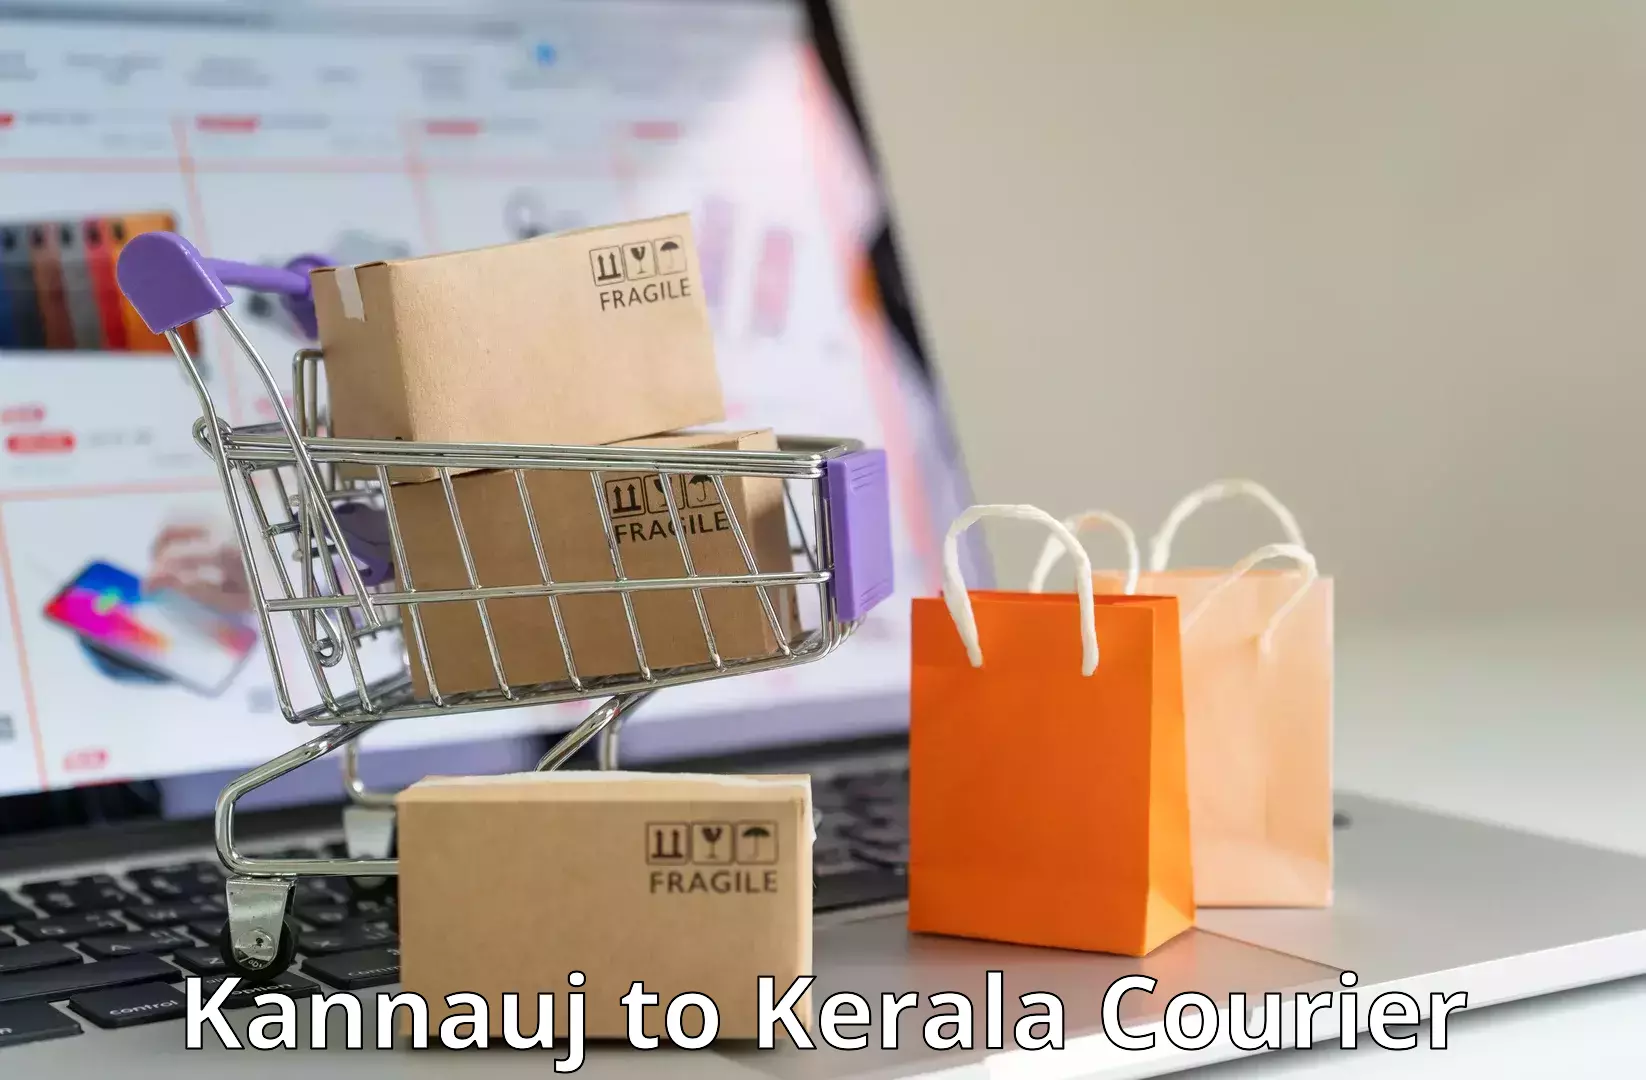 Affordable parcel service Kannauj to Kerala